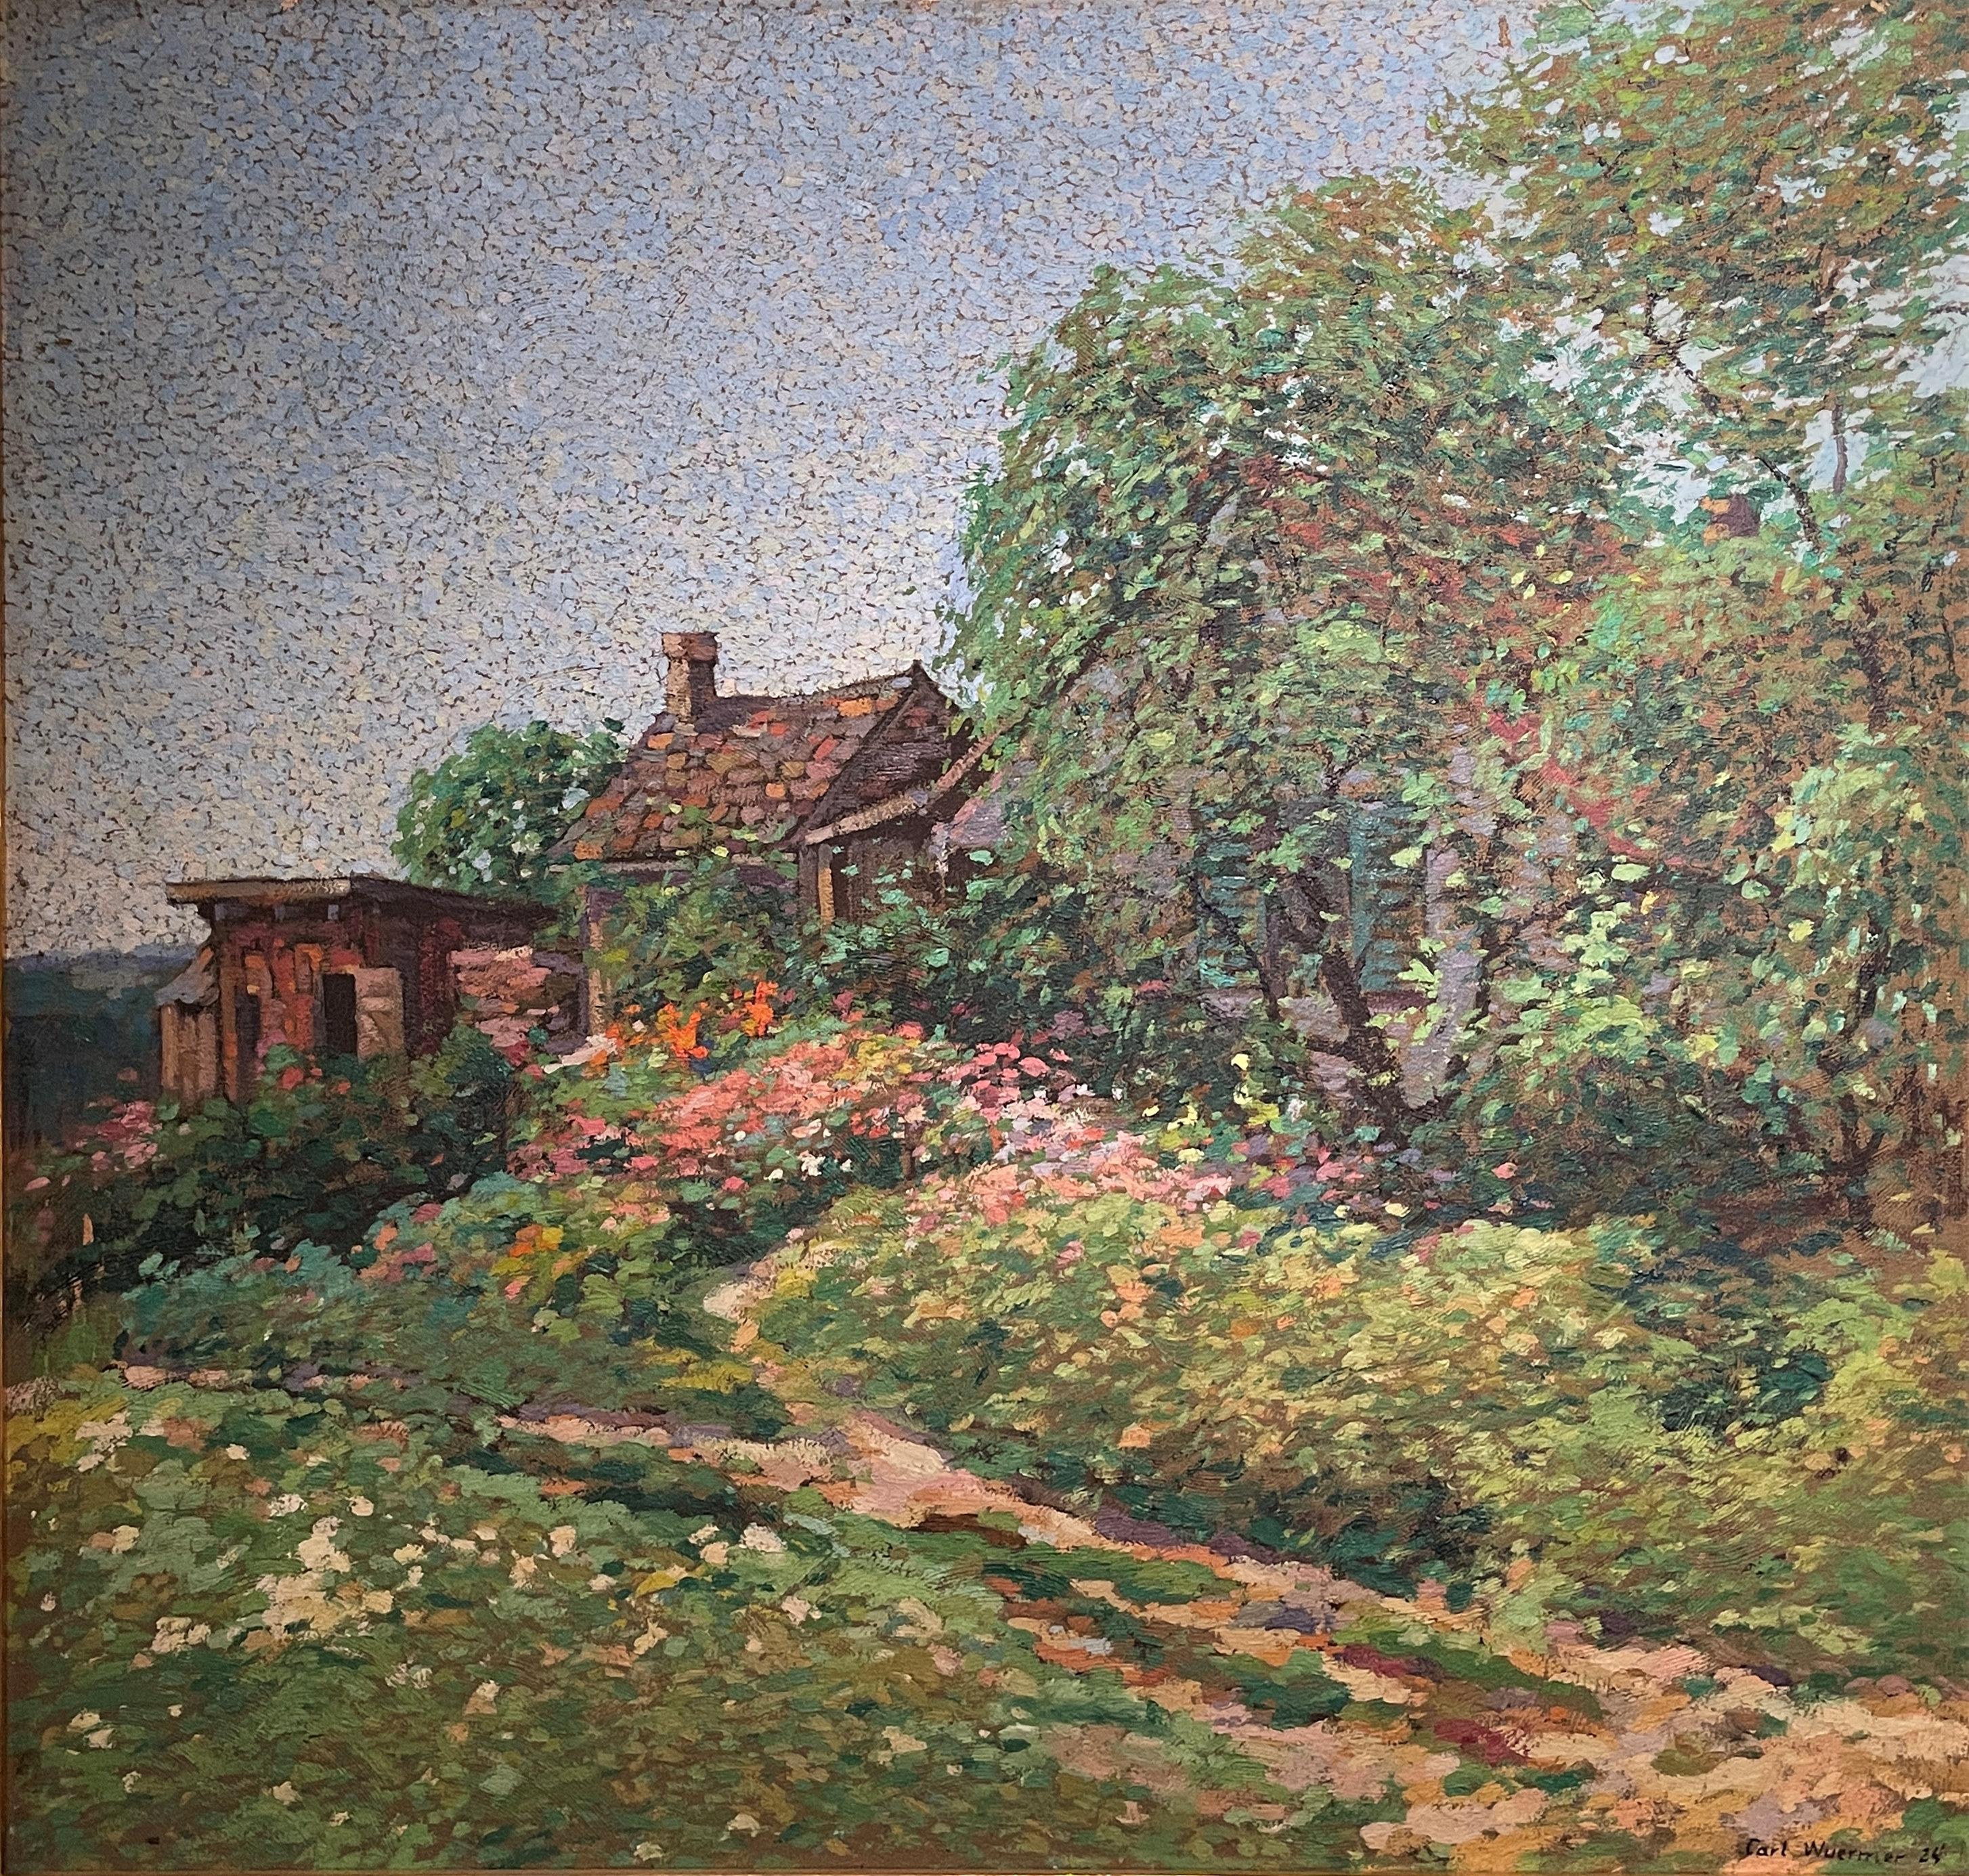 "Late Summer, " Carl Wuermer, Pointilism, American Impressionism August Landscape